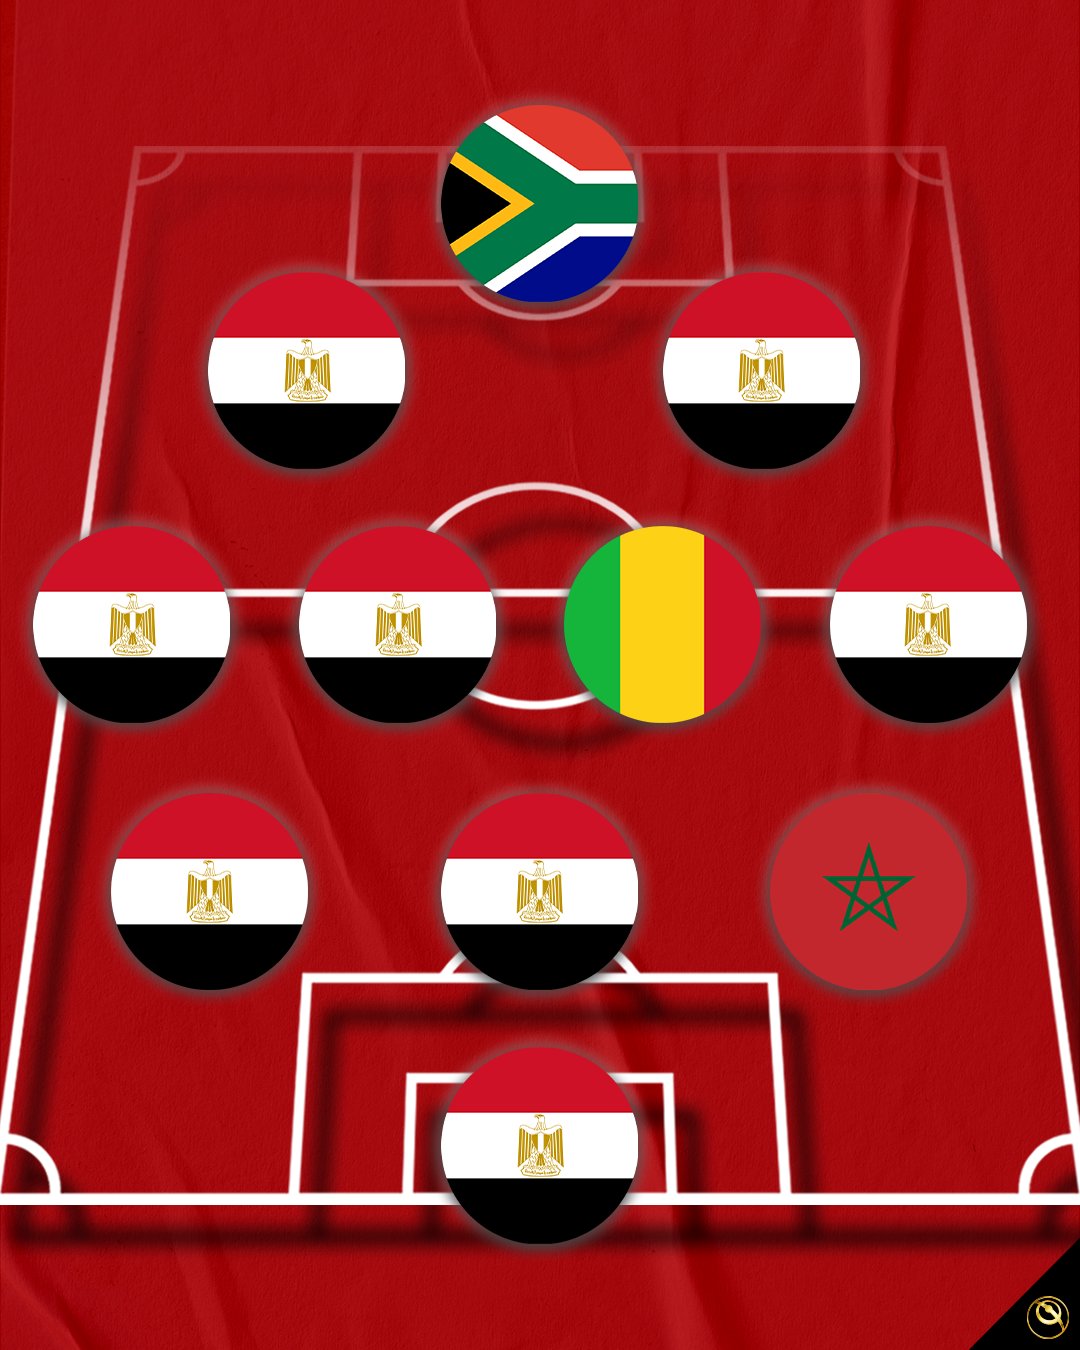 Globe Soccer - Guess the club 👇